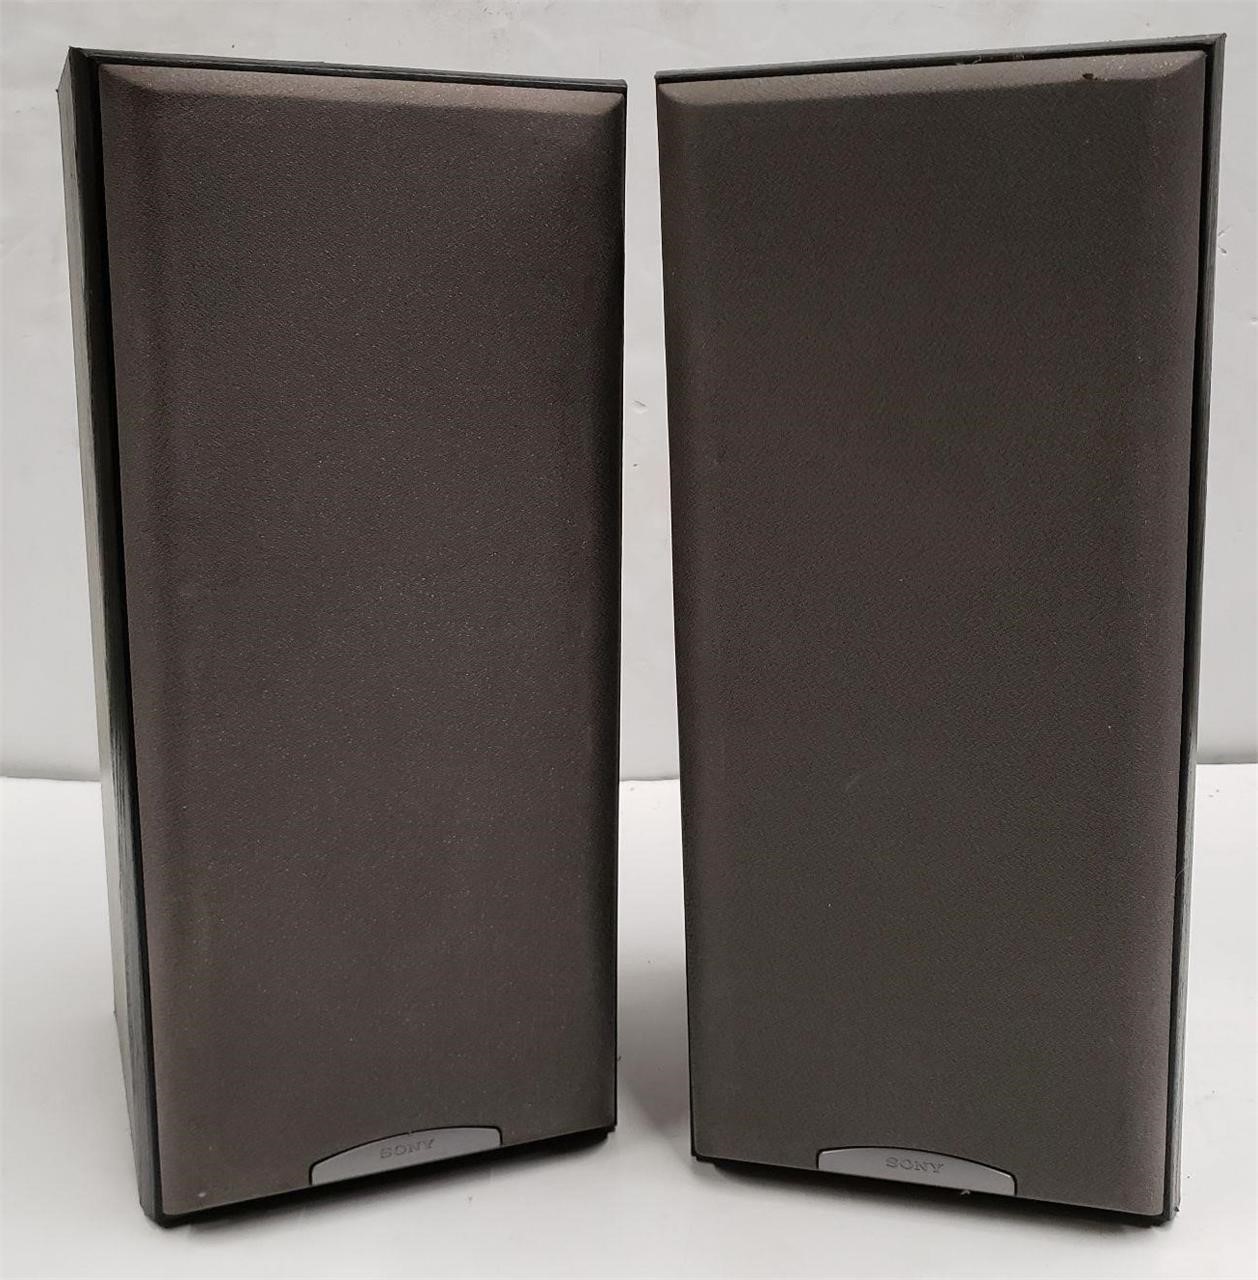 Two Sony Speakers